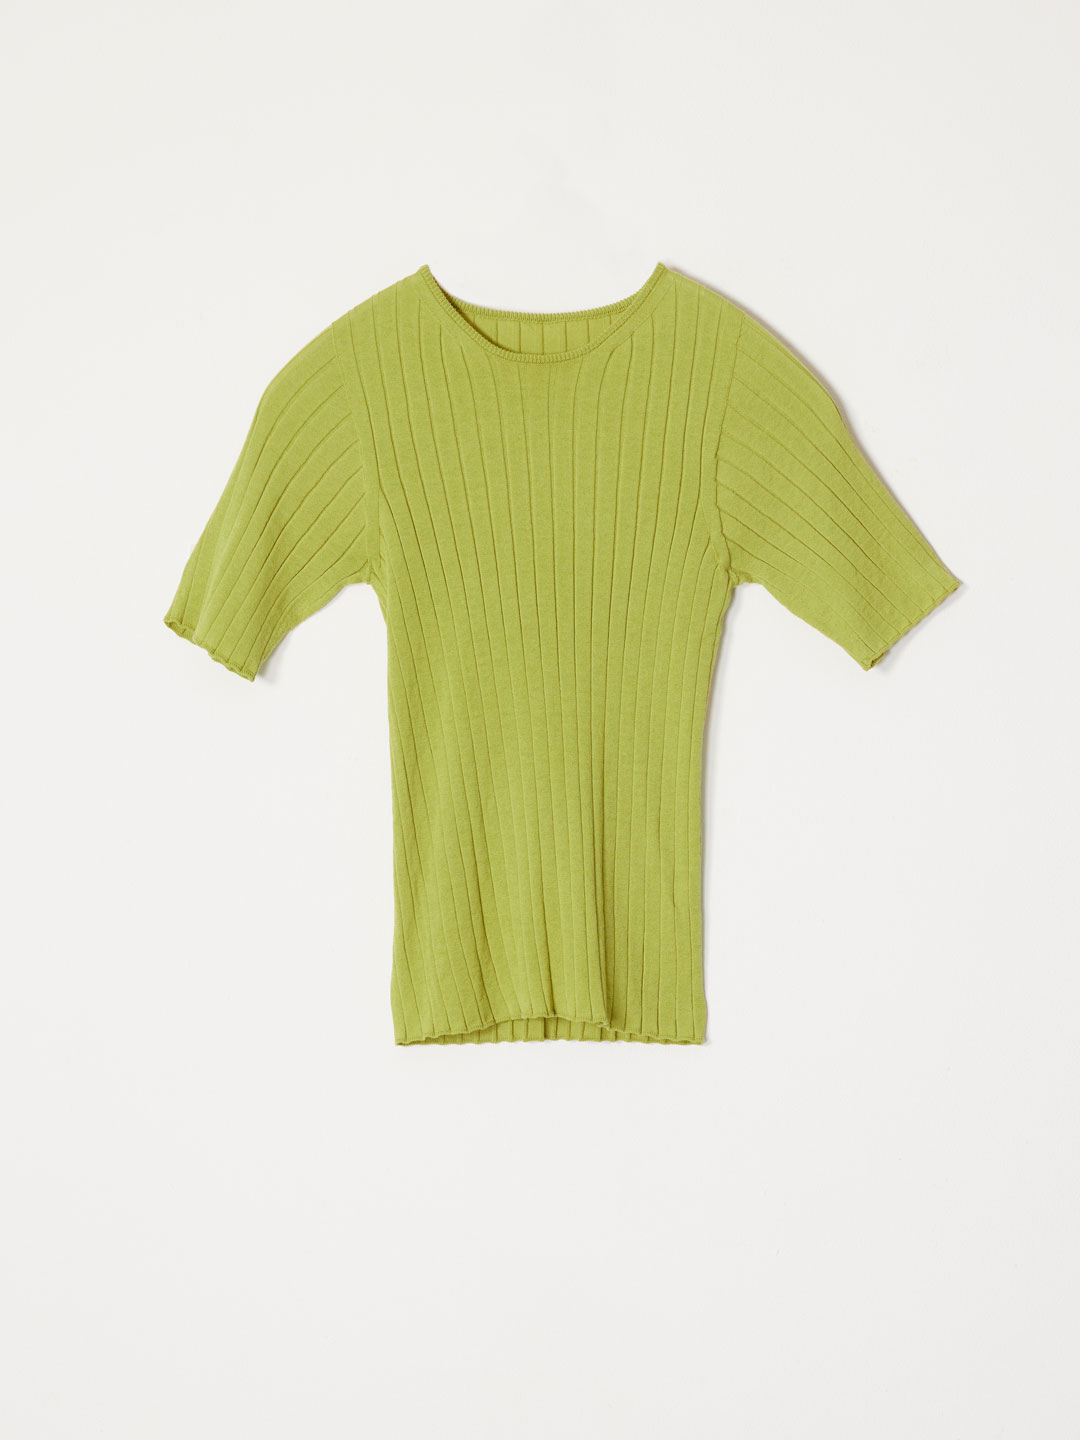 No.0397 Cotton Wide Rib Knit Tee - Light Green/Lime